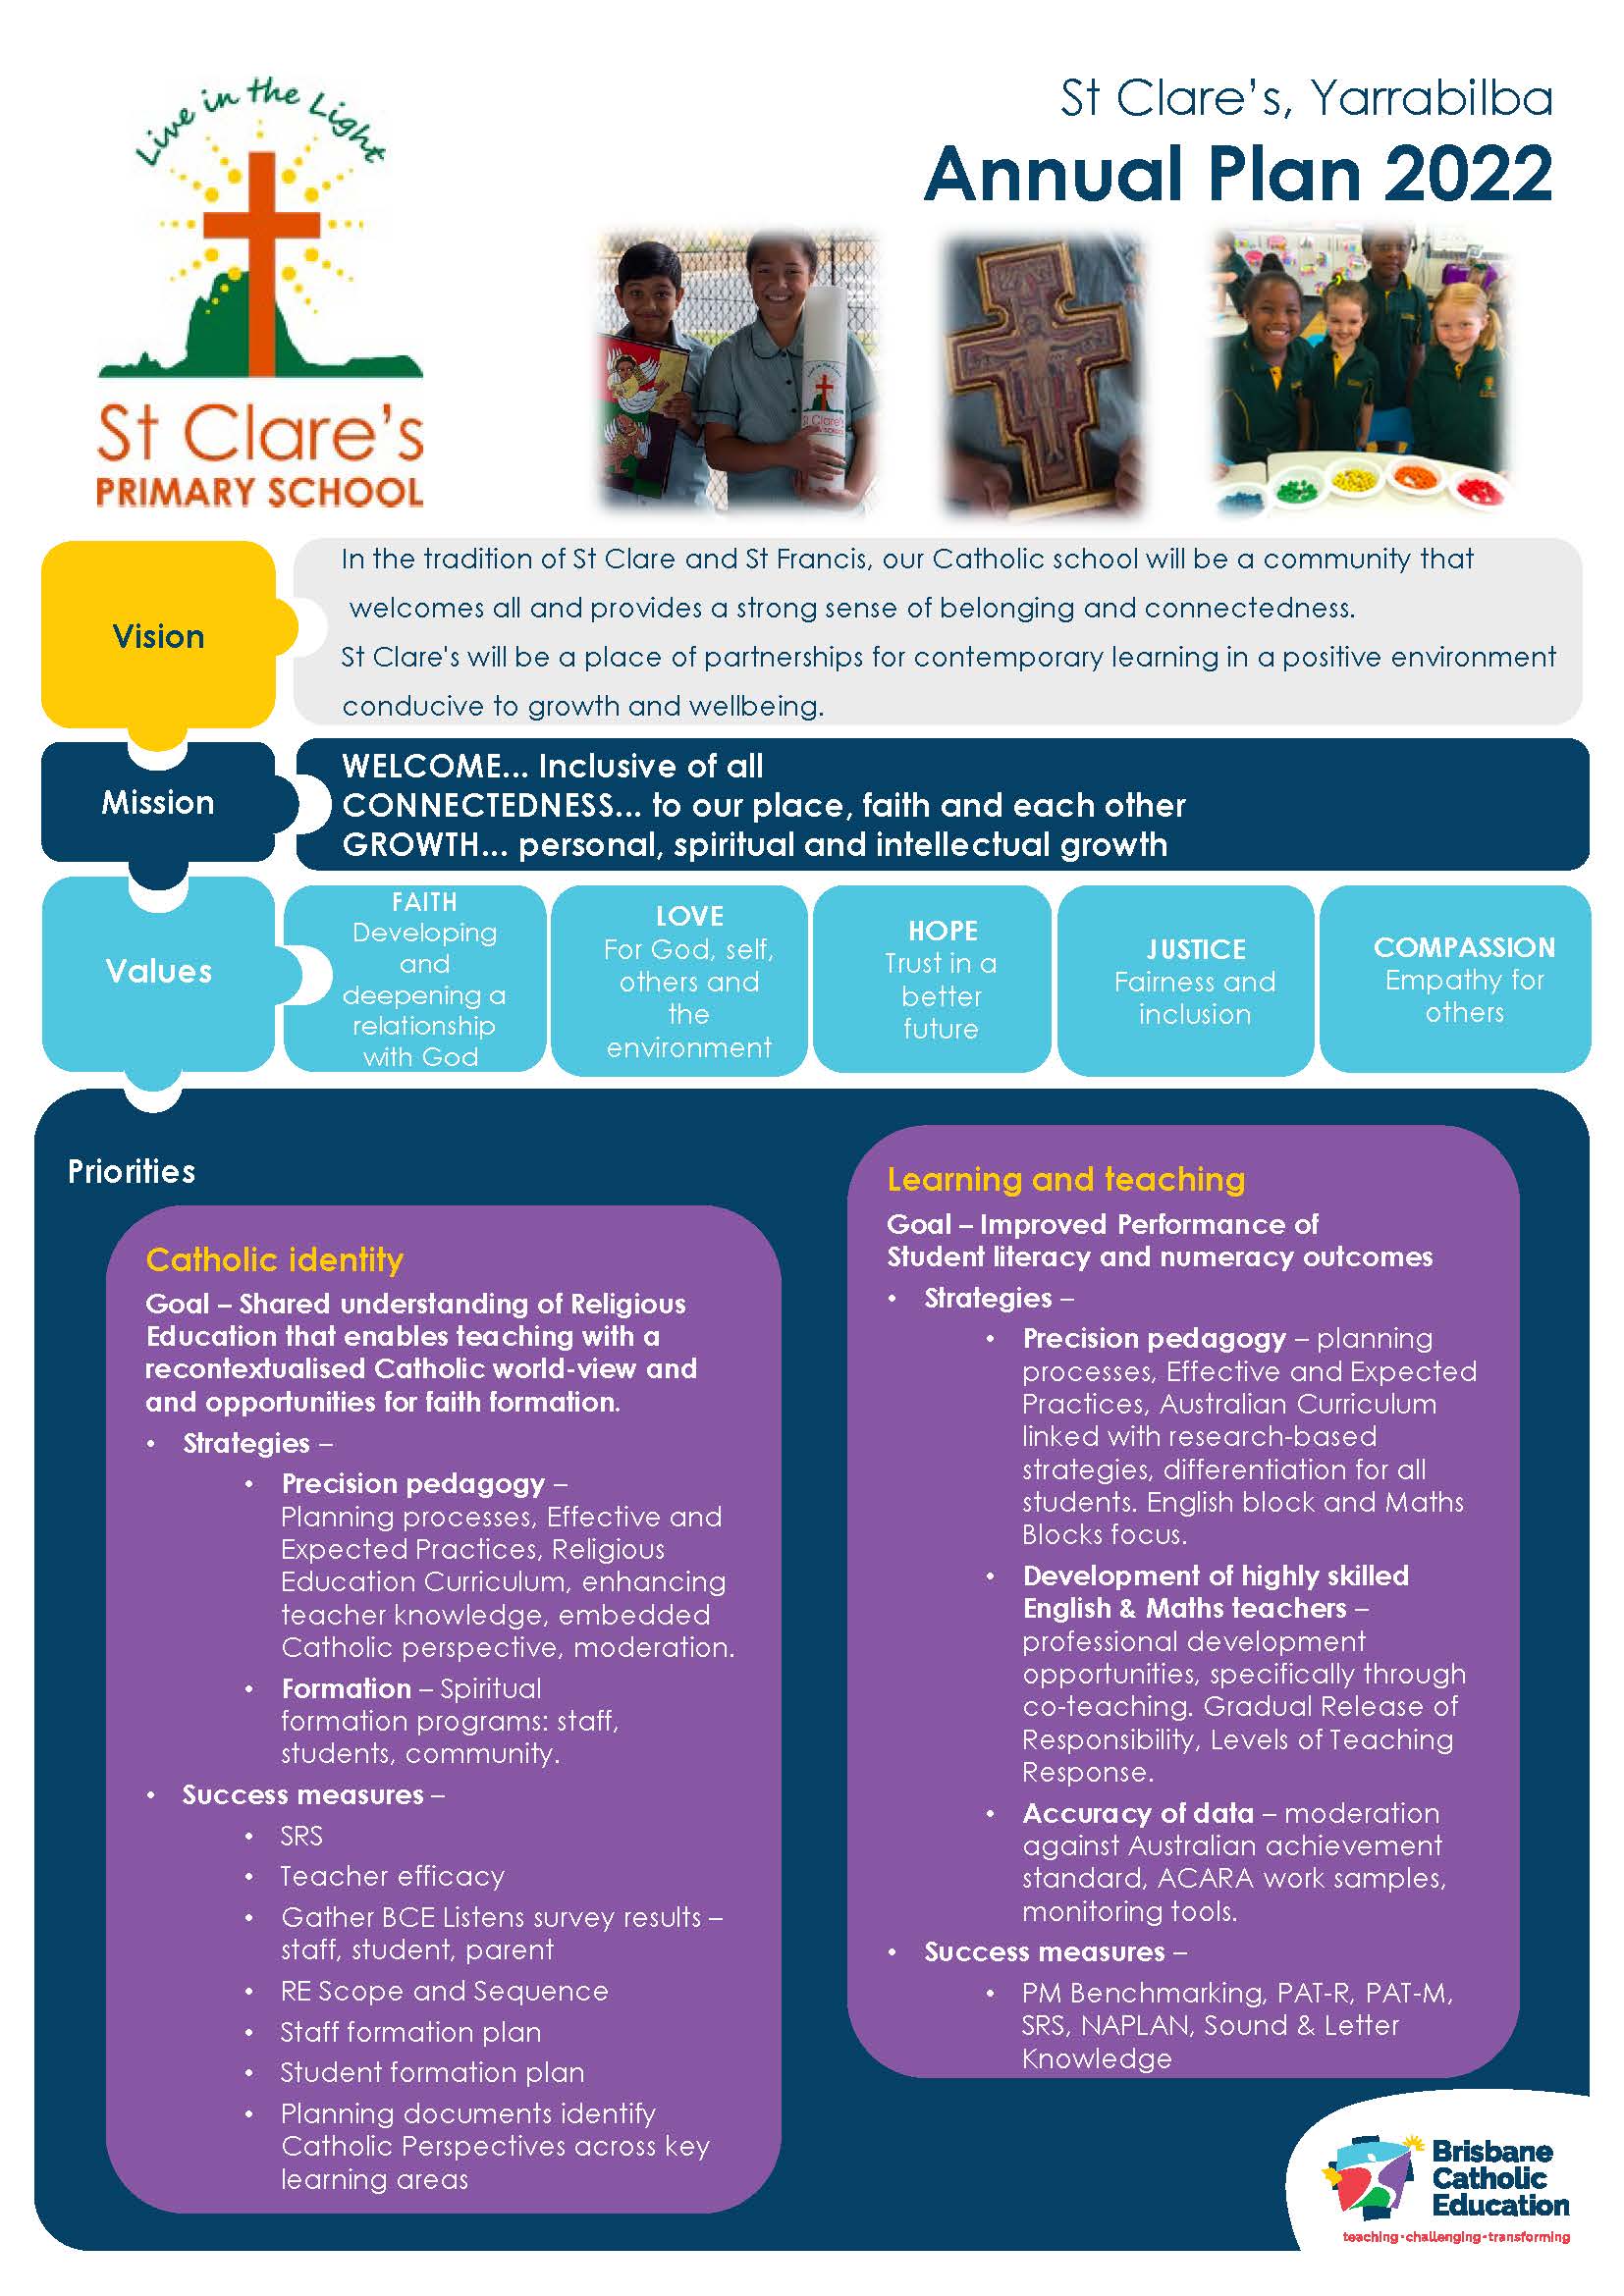 St Clare's Annual Plan 2022.jpg